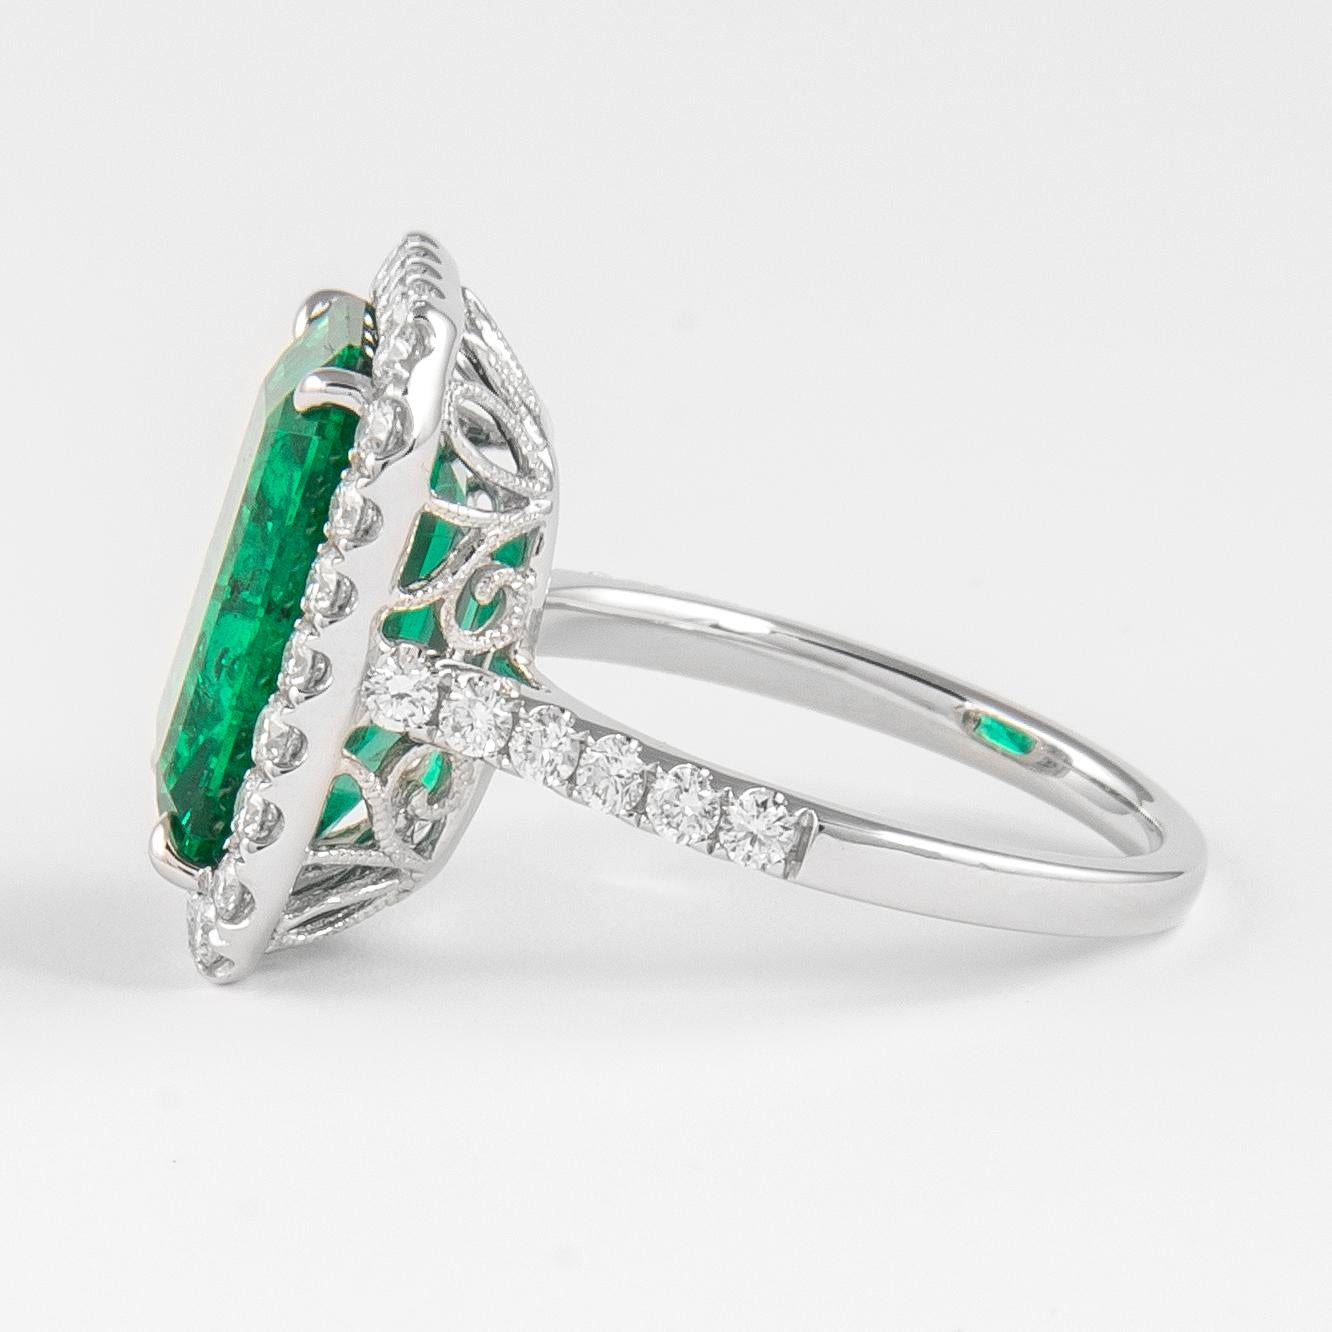 Emerald Cut Alexander GIA certified 7.29 Carat Emerald with Diamond Halo Ring 18 Karat Gold